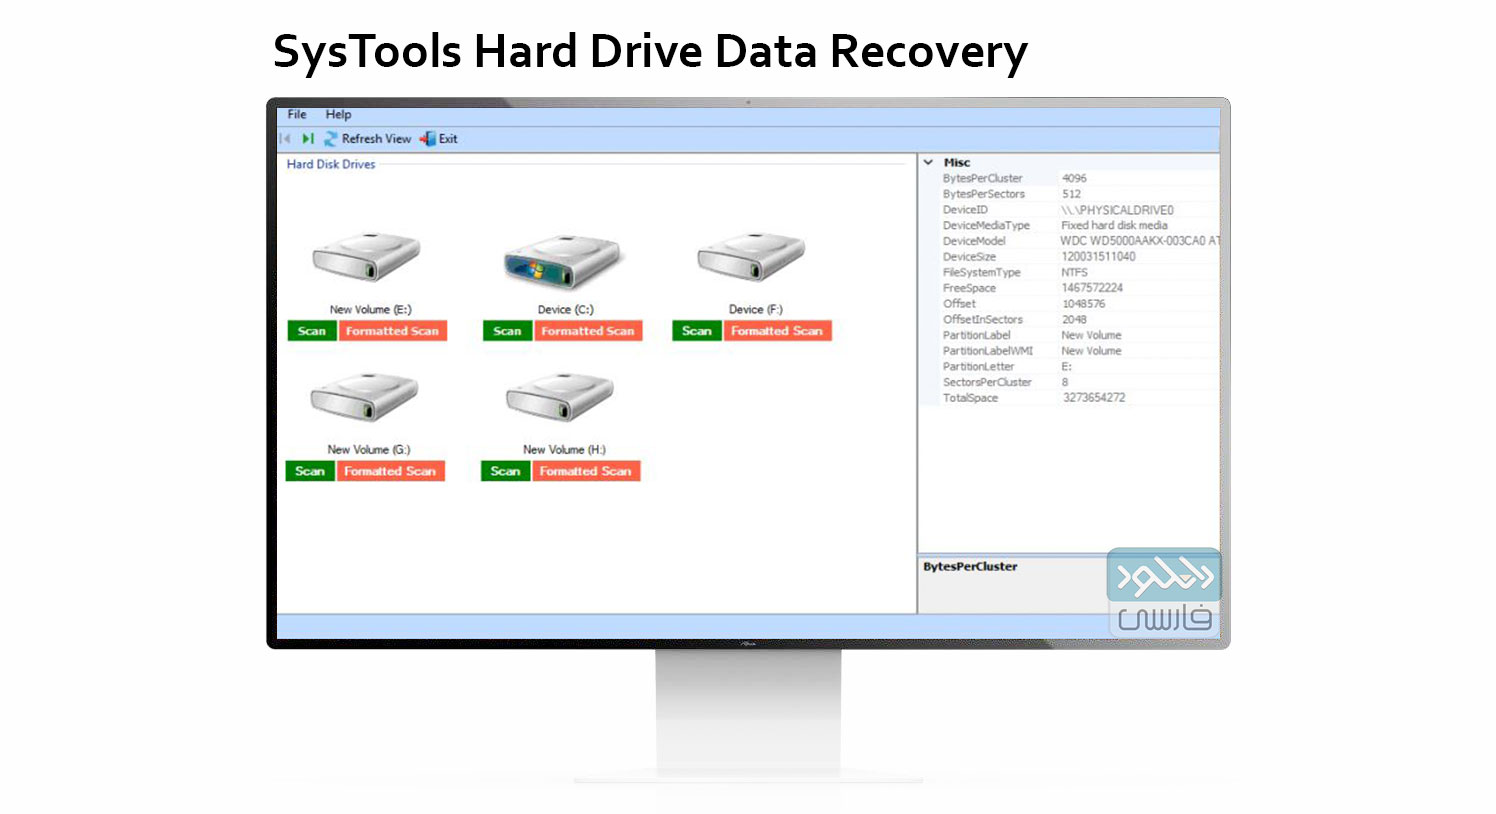 systools hard drive data recovery 16.0.0.0